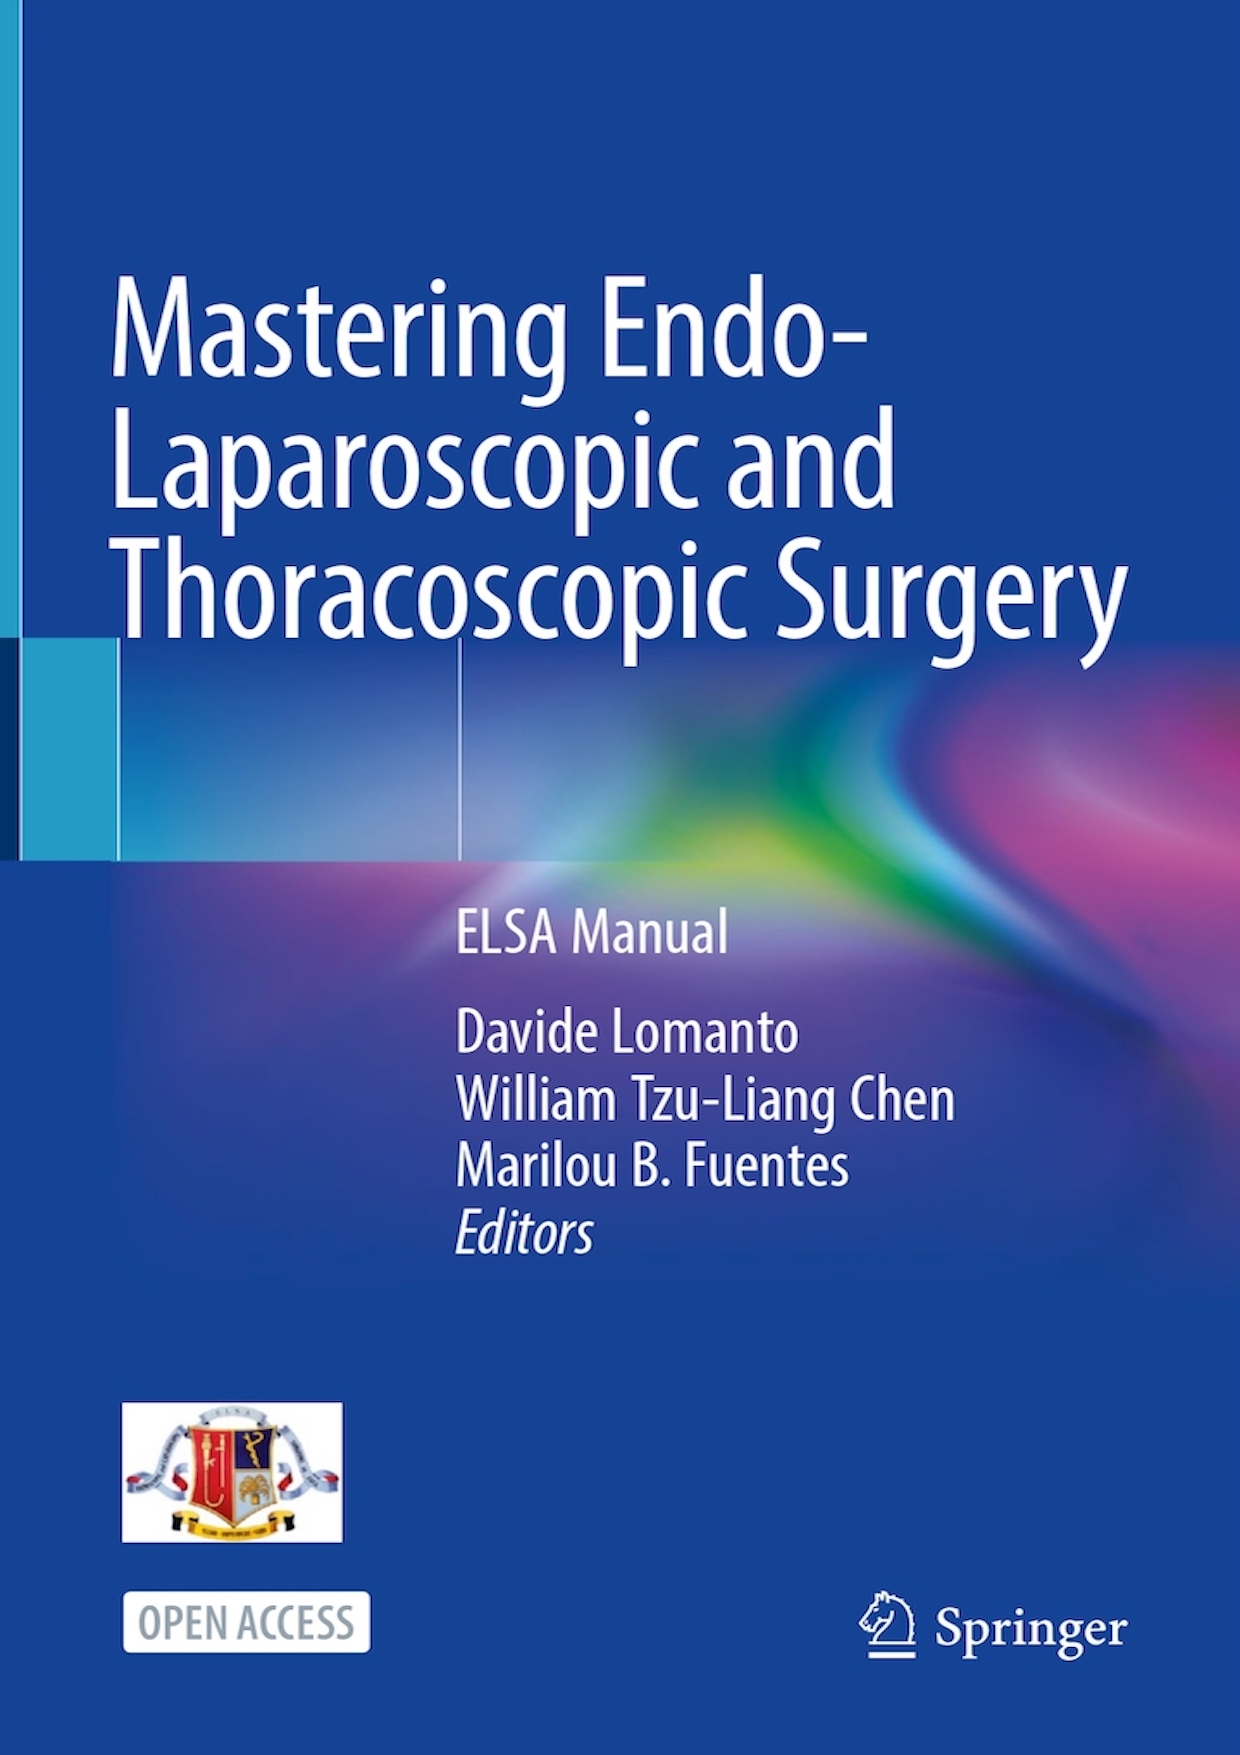 ELSA Manual : Mastering Endo-Laparoscopic and Thoracoscopic Surgery